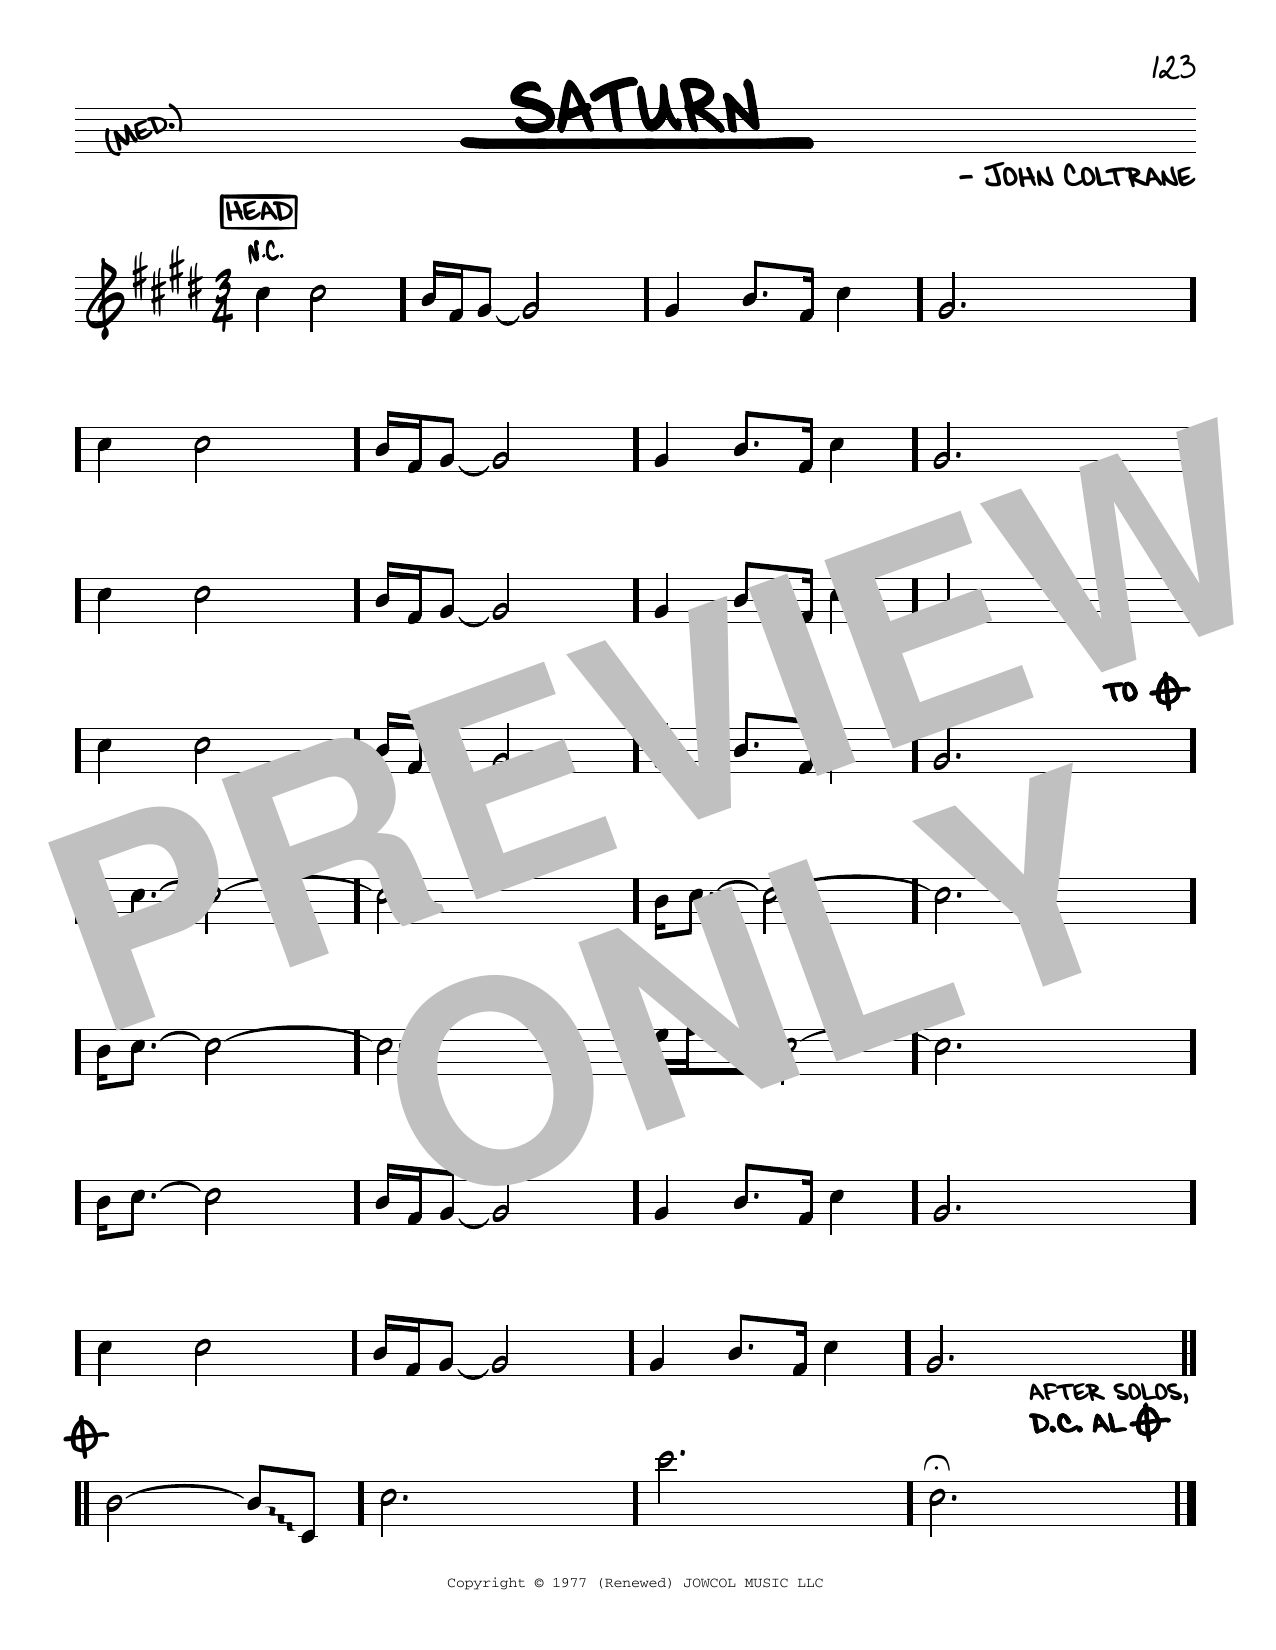 Download John Coltrane Saturn Sheet Music